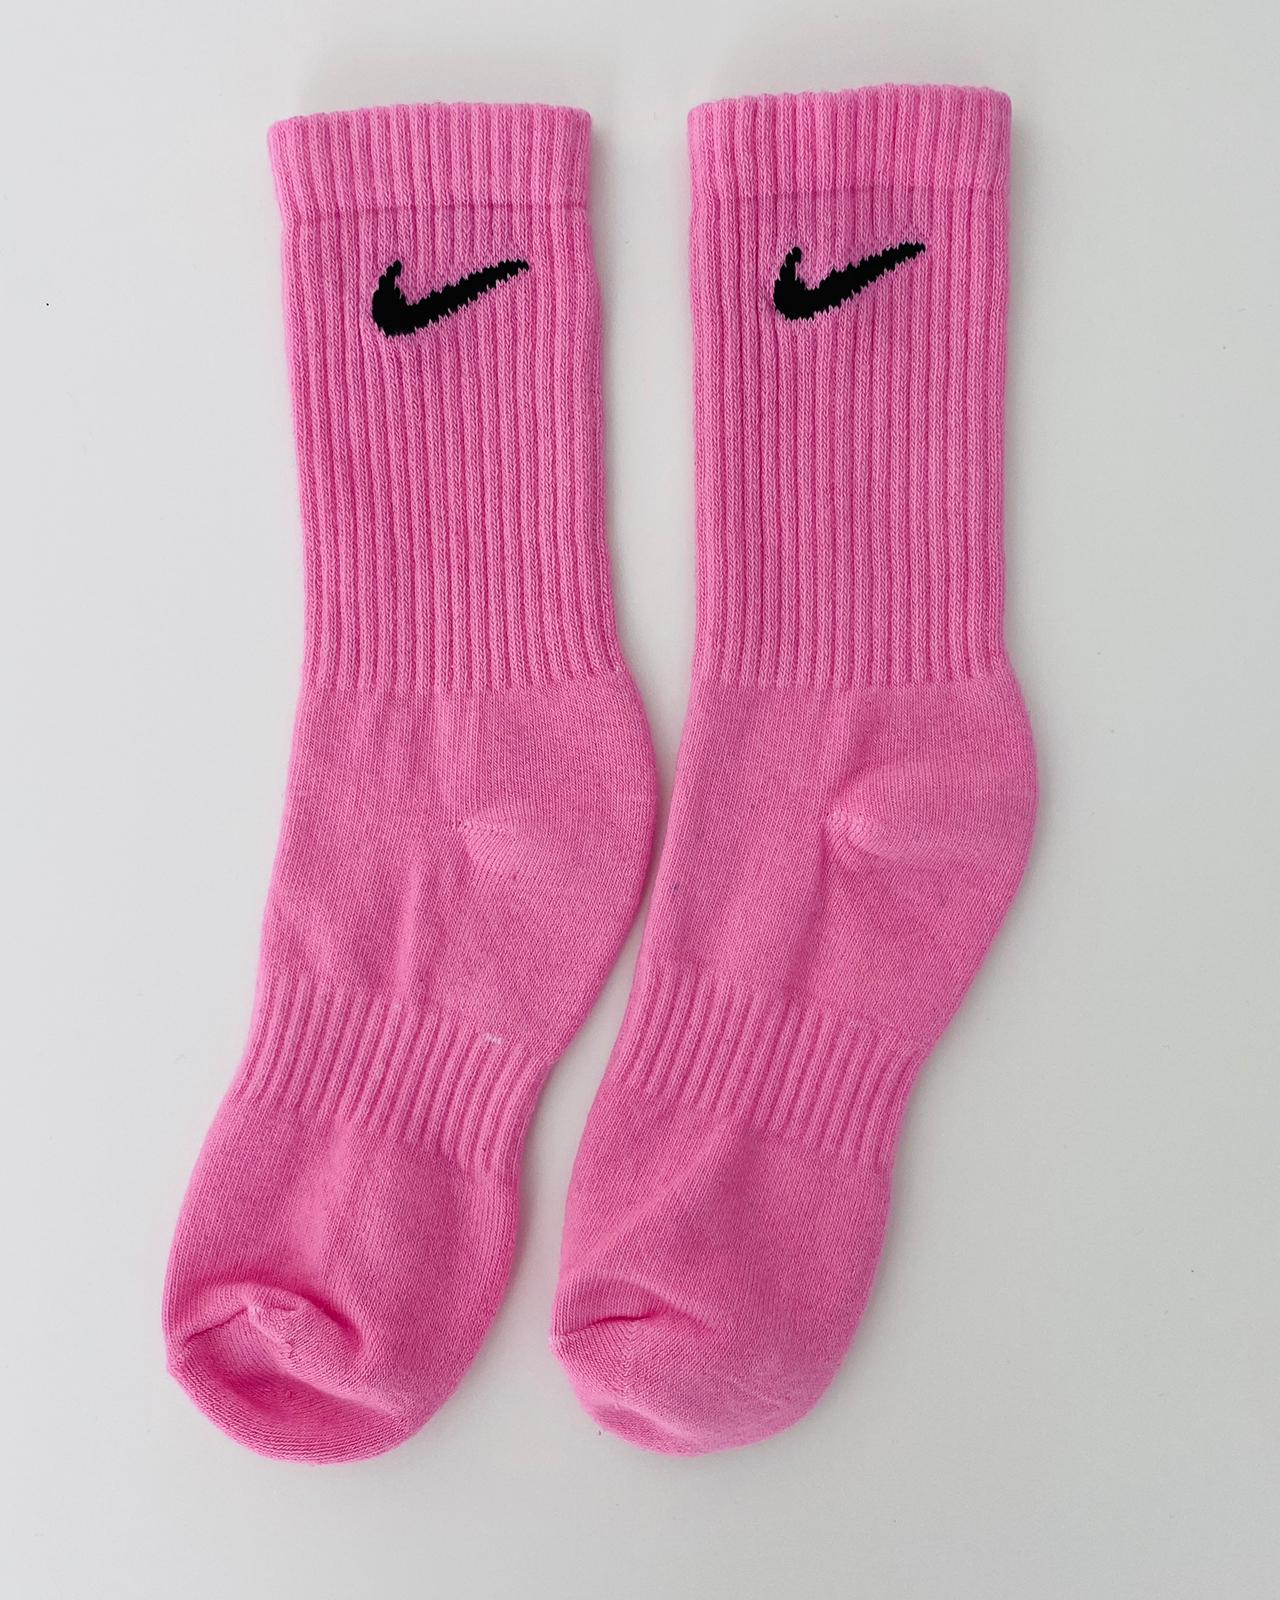 Calcetines Nike customizado basic colour Pink. Calcetines únicos y diferentes 100% originales teñidos a mano. Shop NOW!